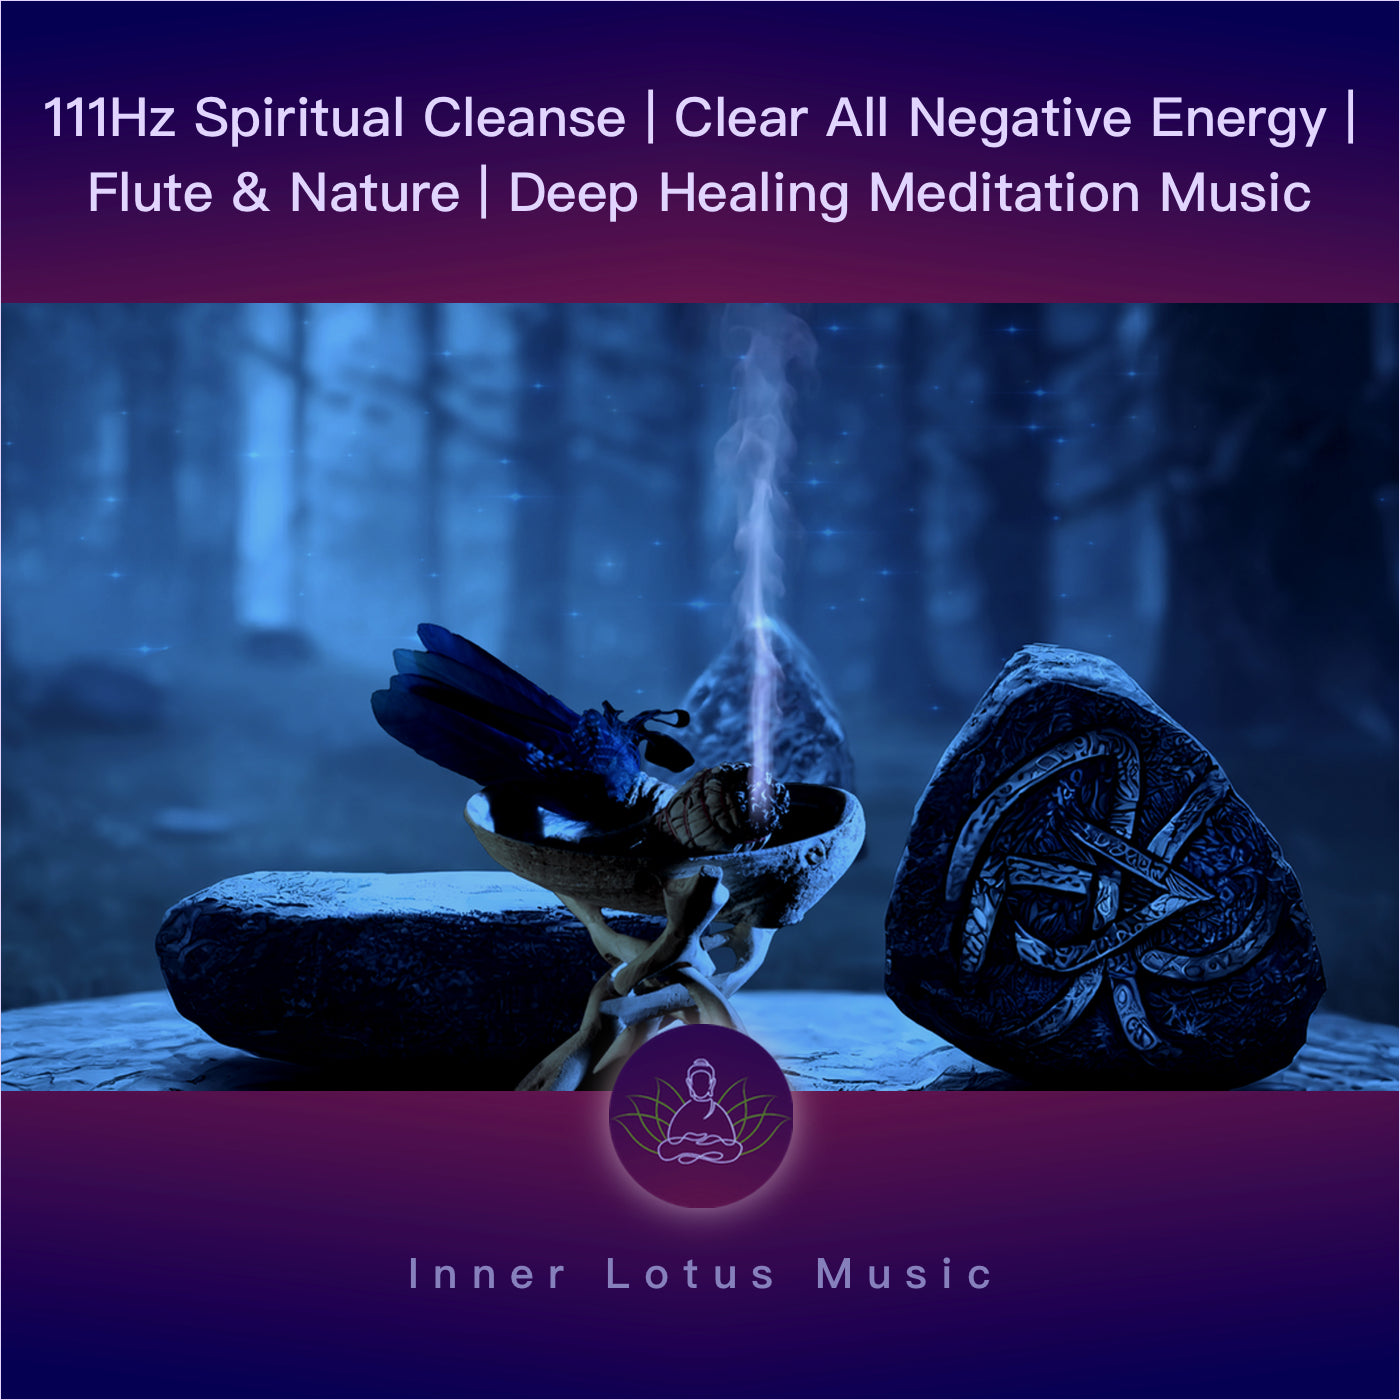 111Hz Spiritual Cleanse | Clear All Negative Energy | Flute & Nature | Deep Healing Meditation Music